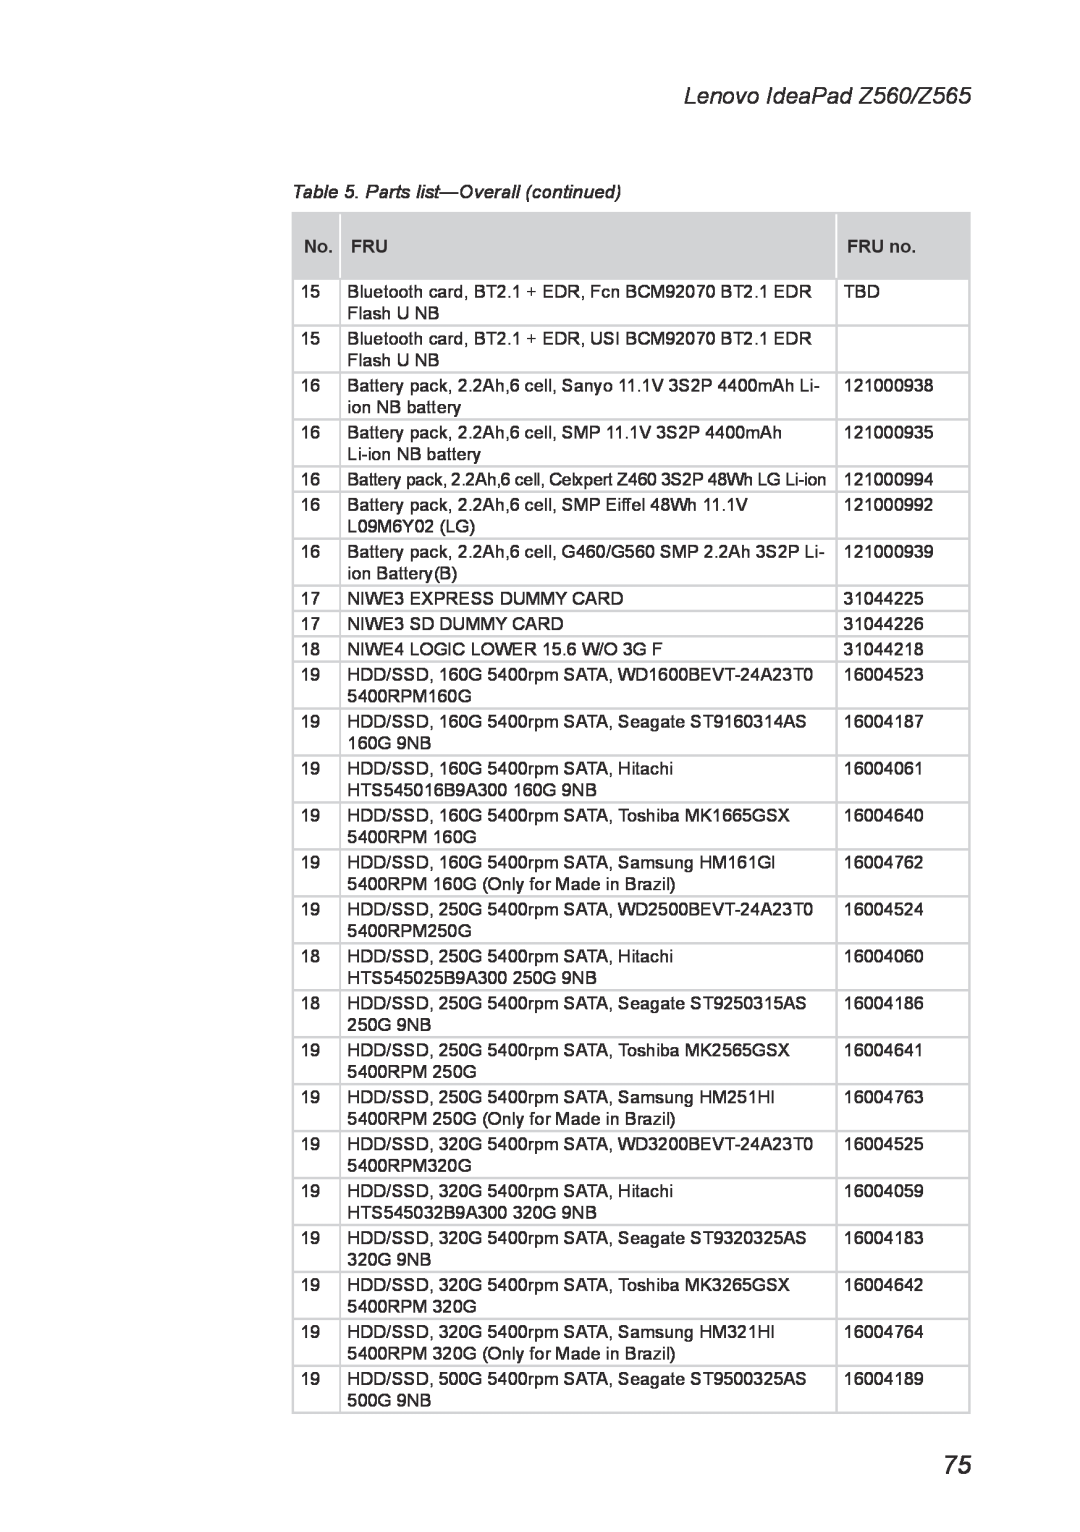 Lenovo manual Lenovo IdeaPad Z560/Z565, Parts list-Overall continued 